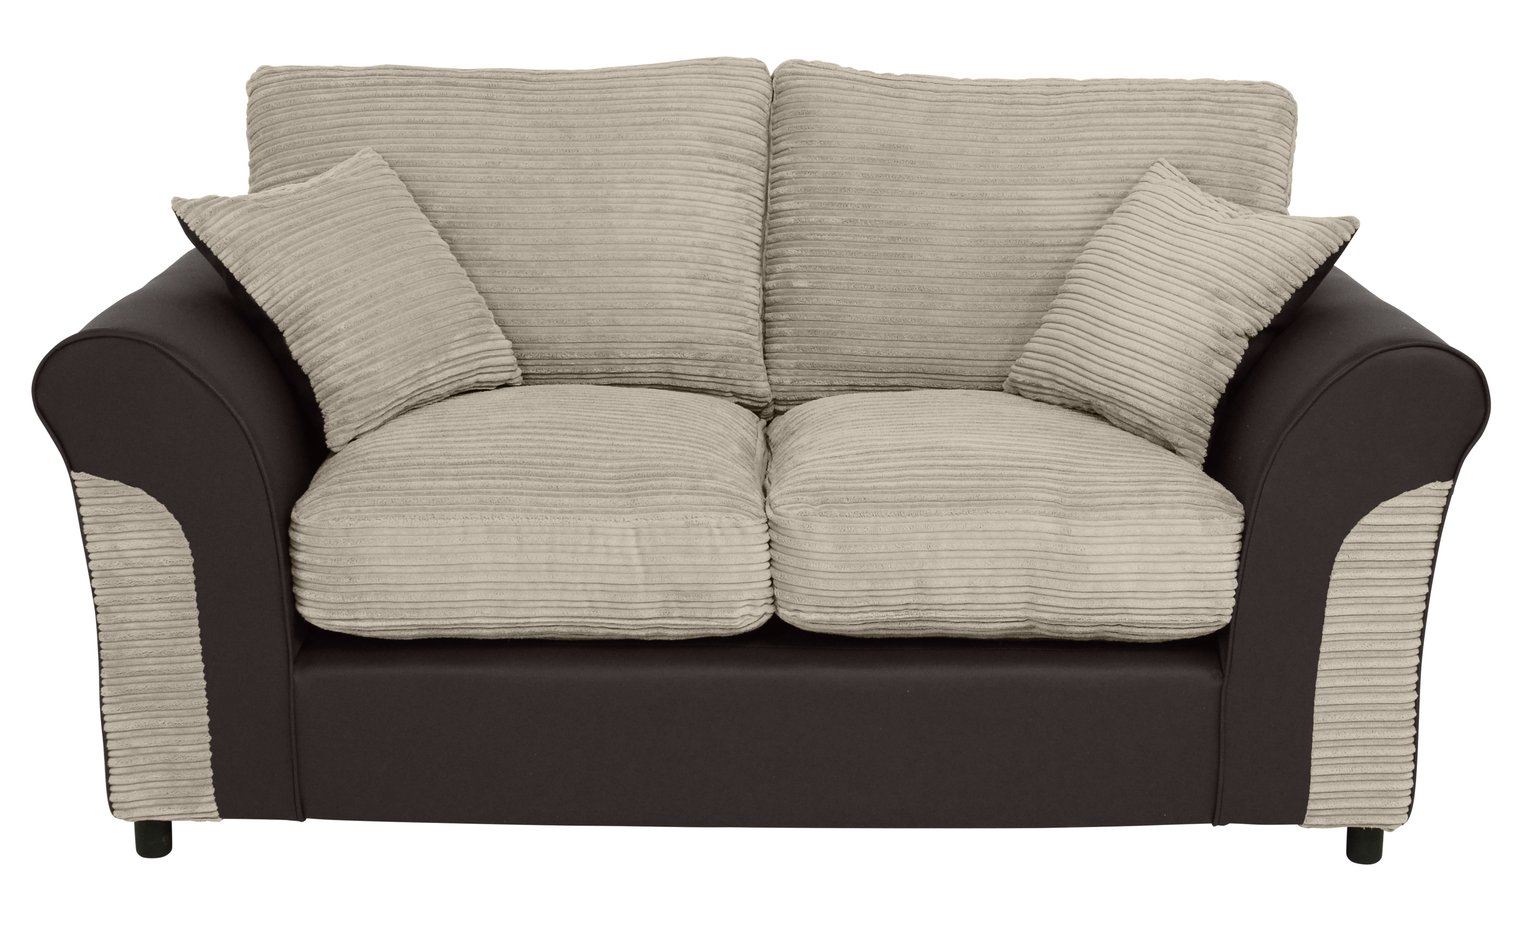 Argos Home Harry 2 Seater Fabric Sofa Review